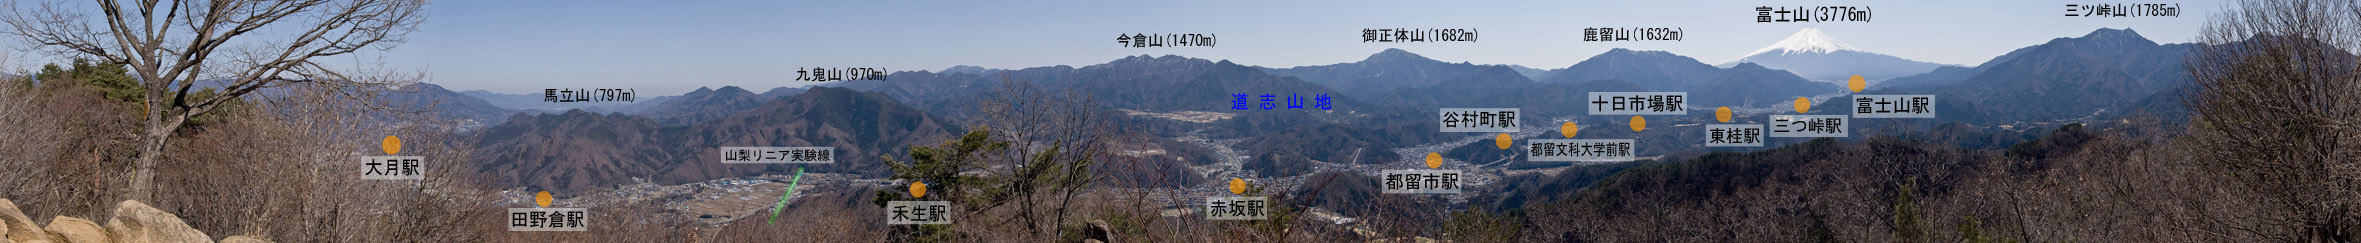 View from Mt.Takagawa 01-3.jpg